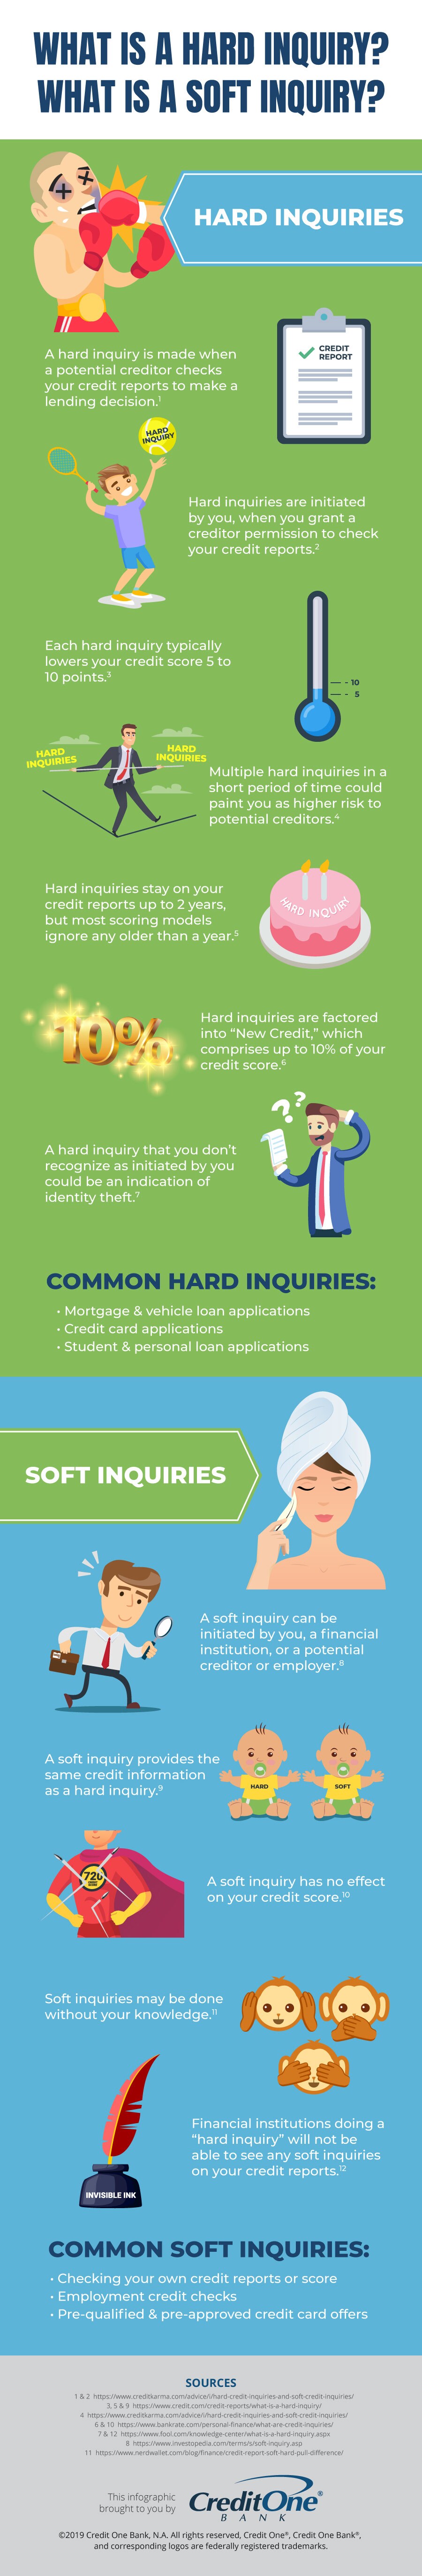 Infographic of hard vs soft inquiries